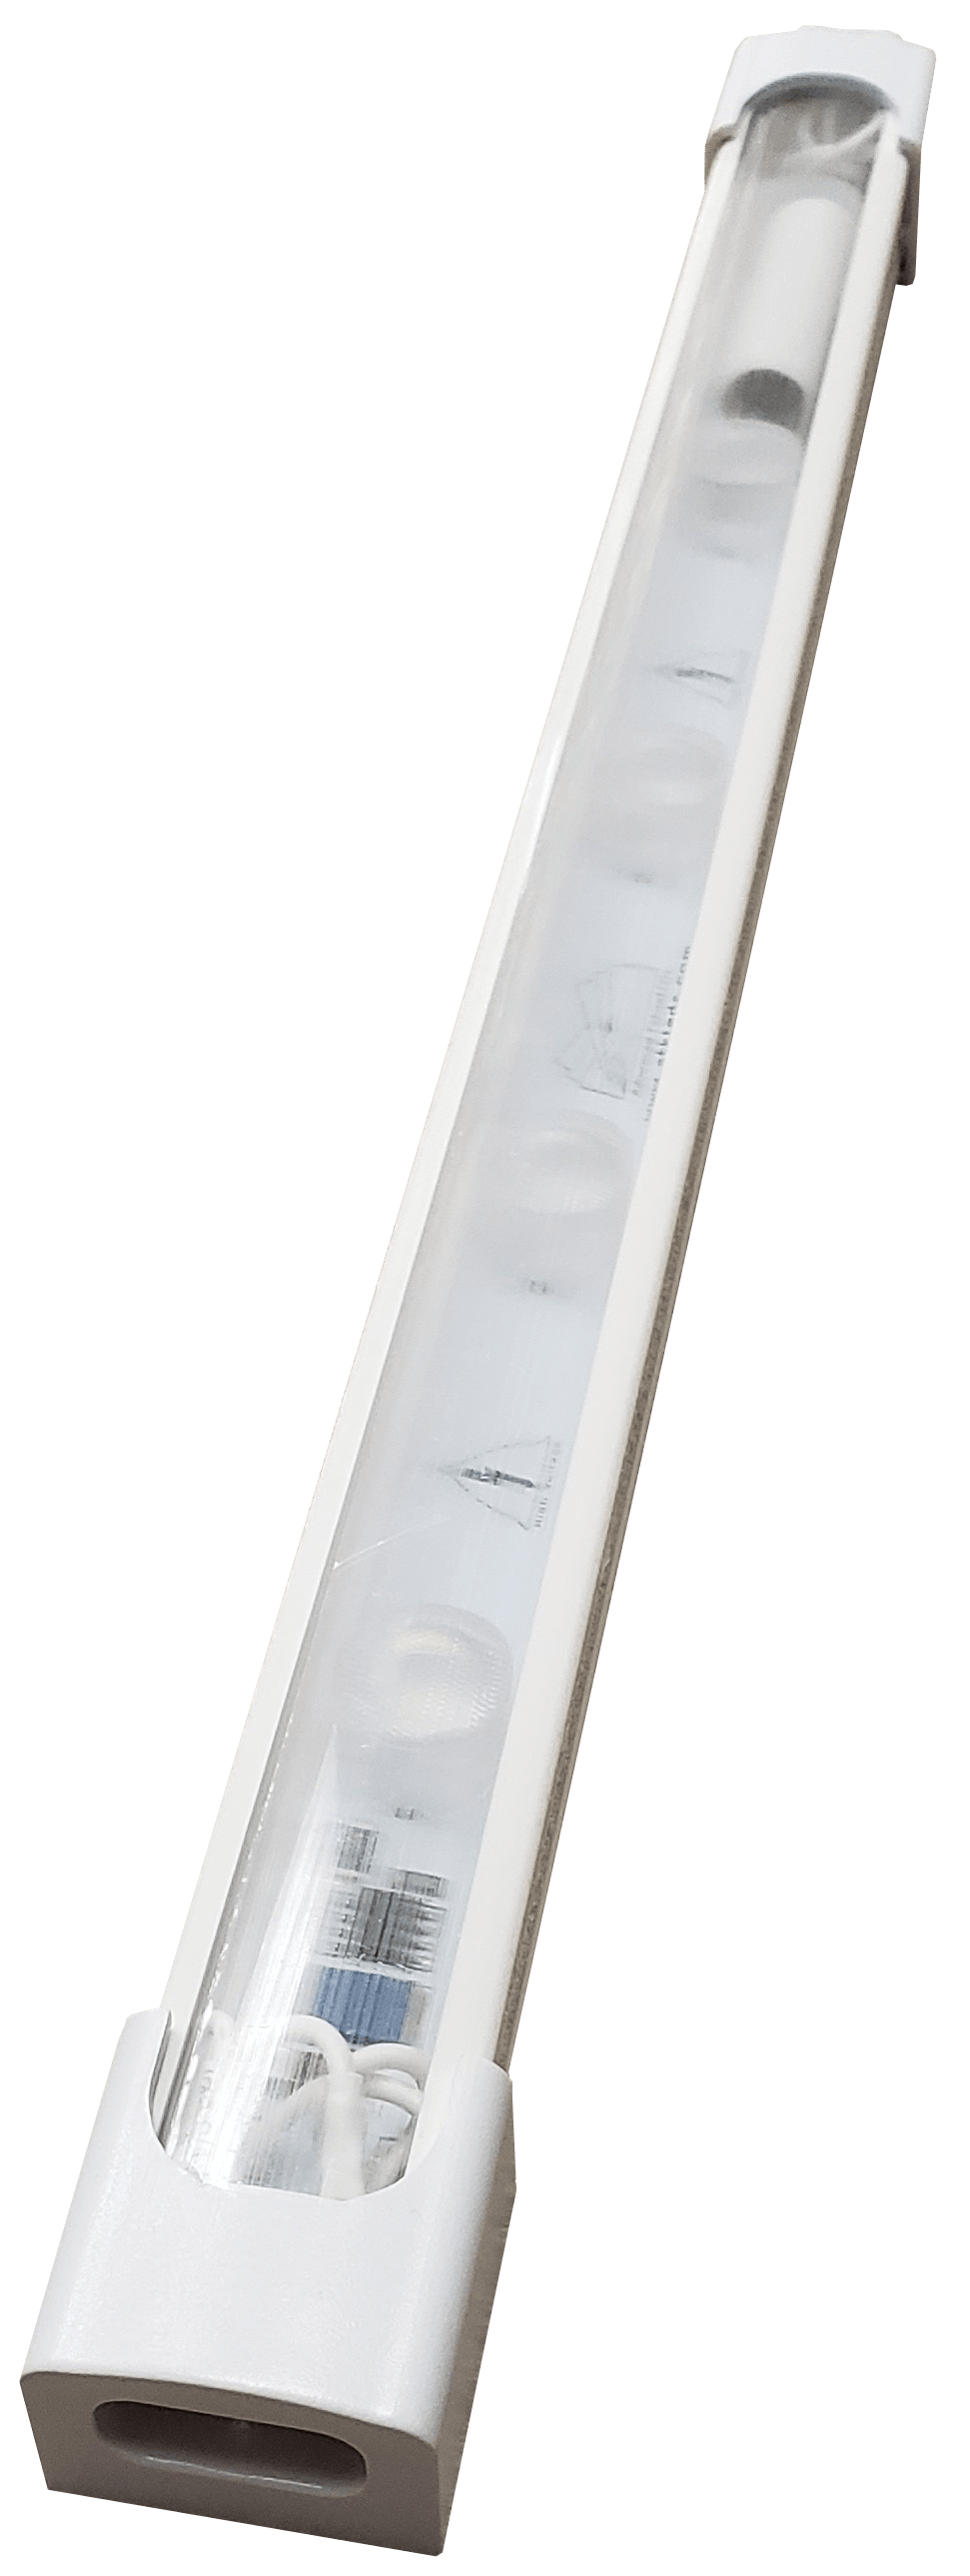 Dimmable Flicker-Free LED Light Stick 可调光无闪烁 LED 灯棒